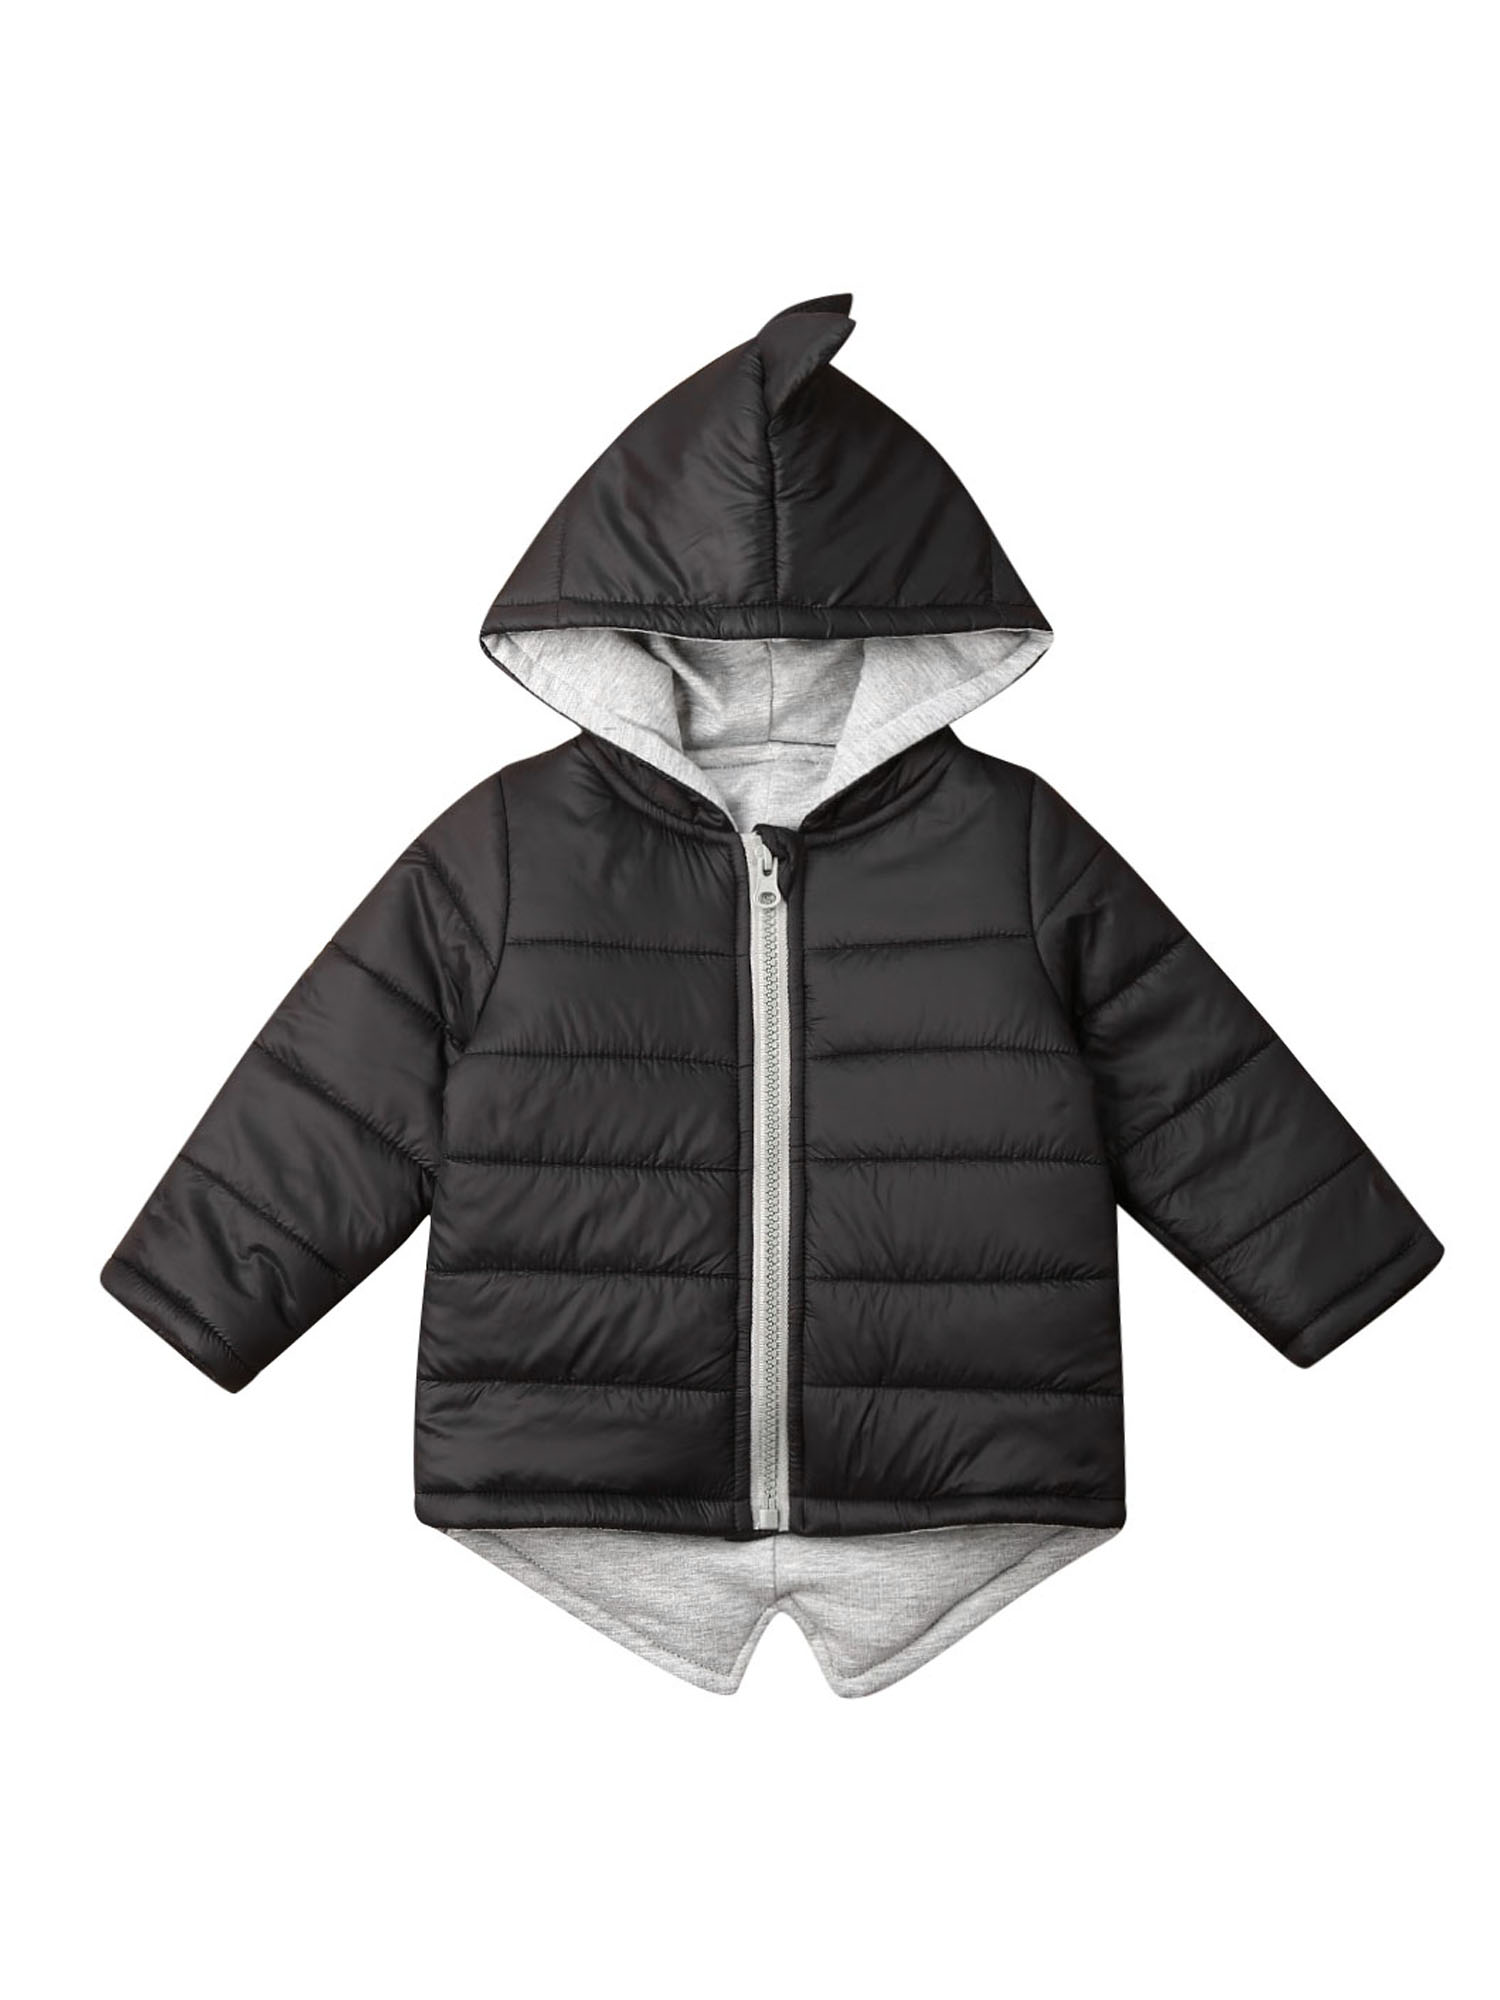 Toddler Baby Boys Girls Coat Long Sleeve Hooded Padded Jacket Winter Warm Light Puffer Jacket Outwear - image 1 of 6